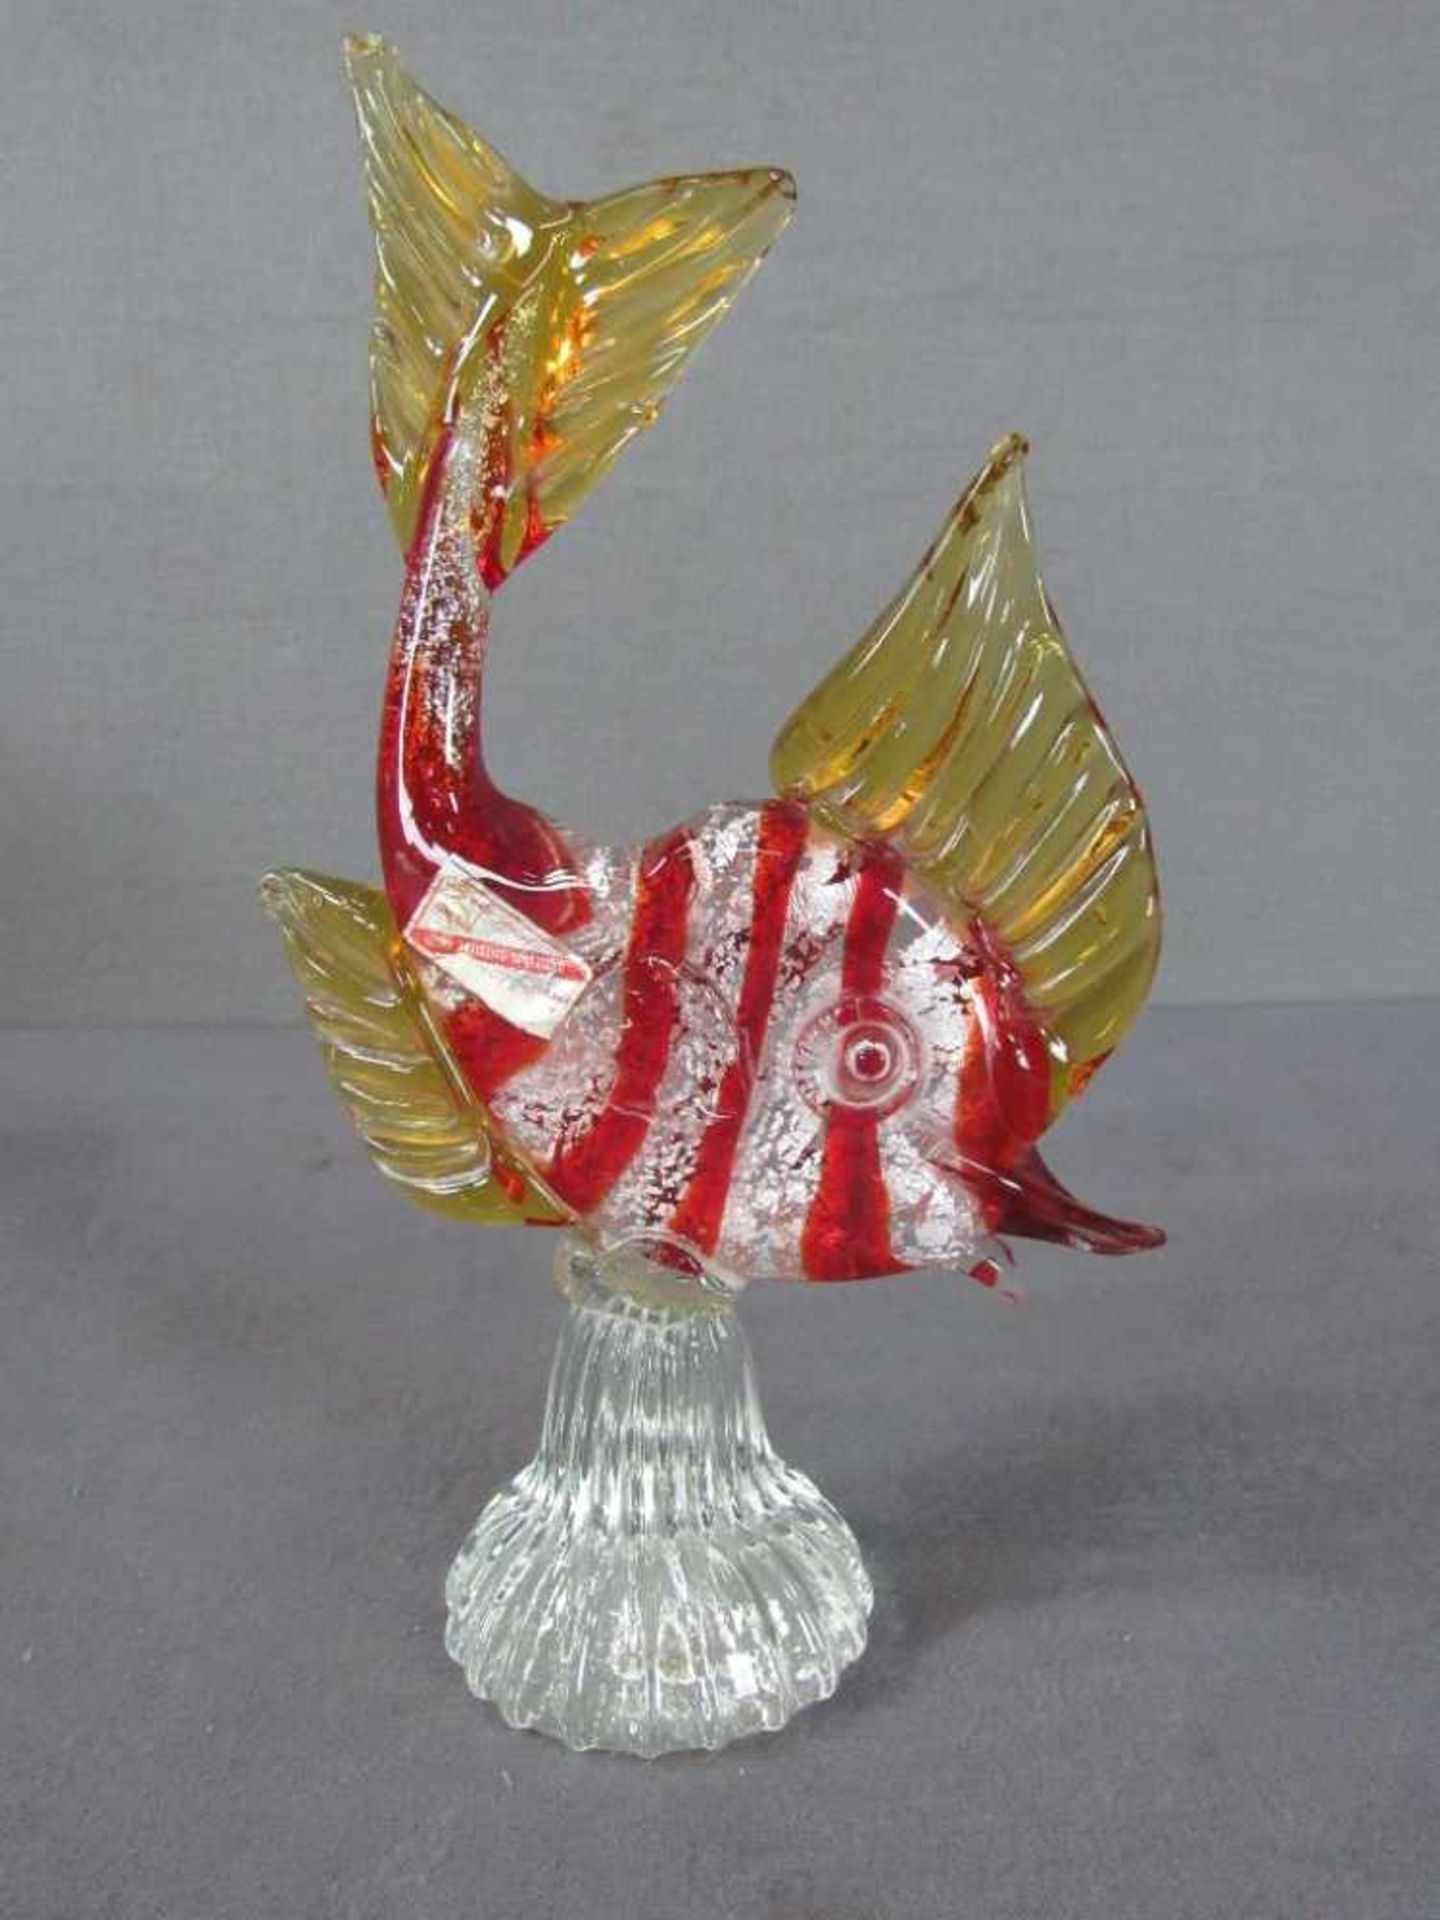 Glasskulptur Fisch gelabelt Venedig Silberflitter 26cm hoch